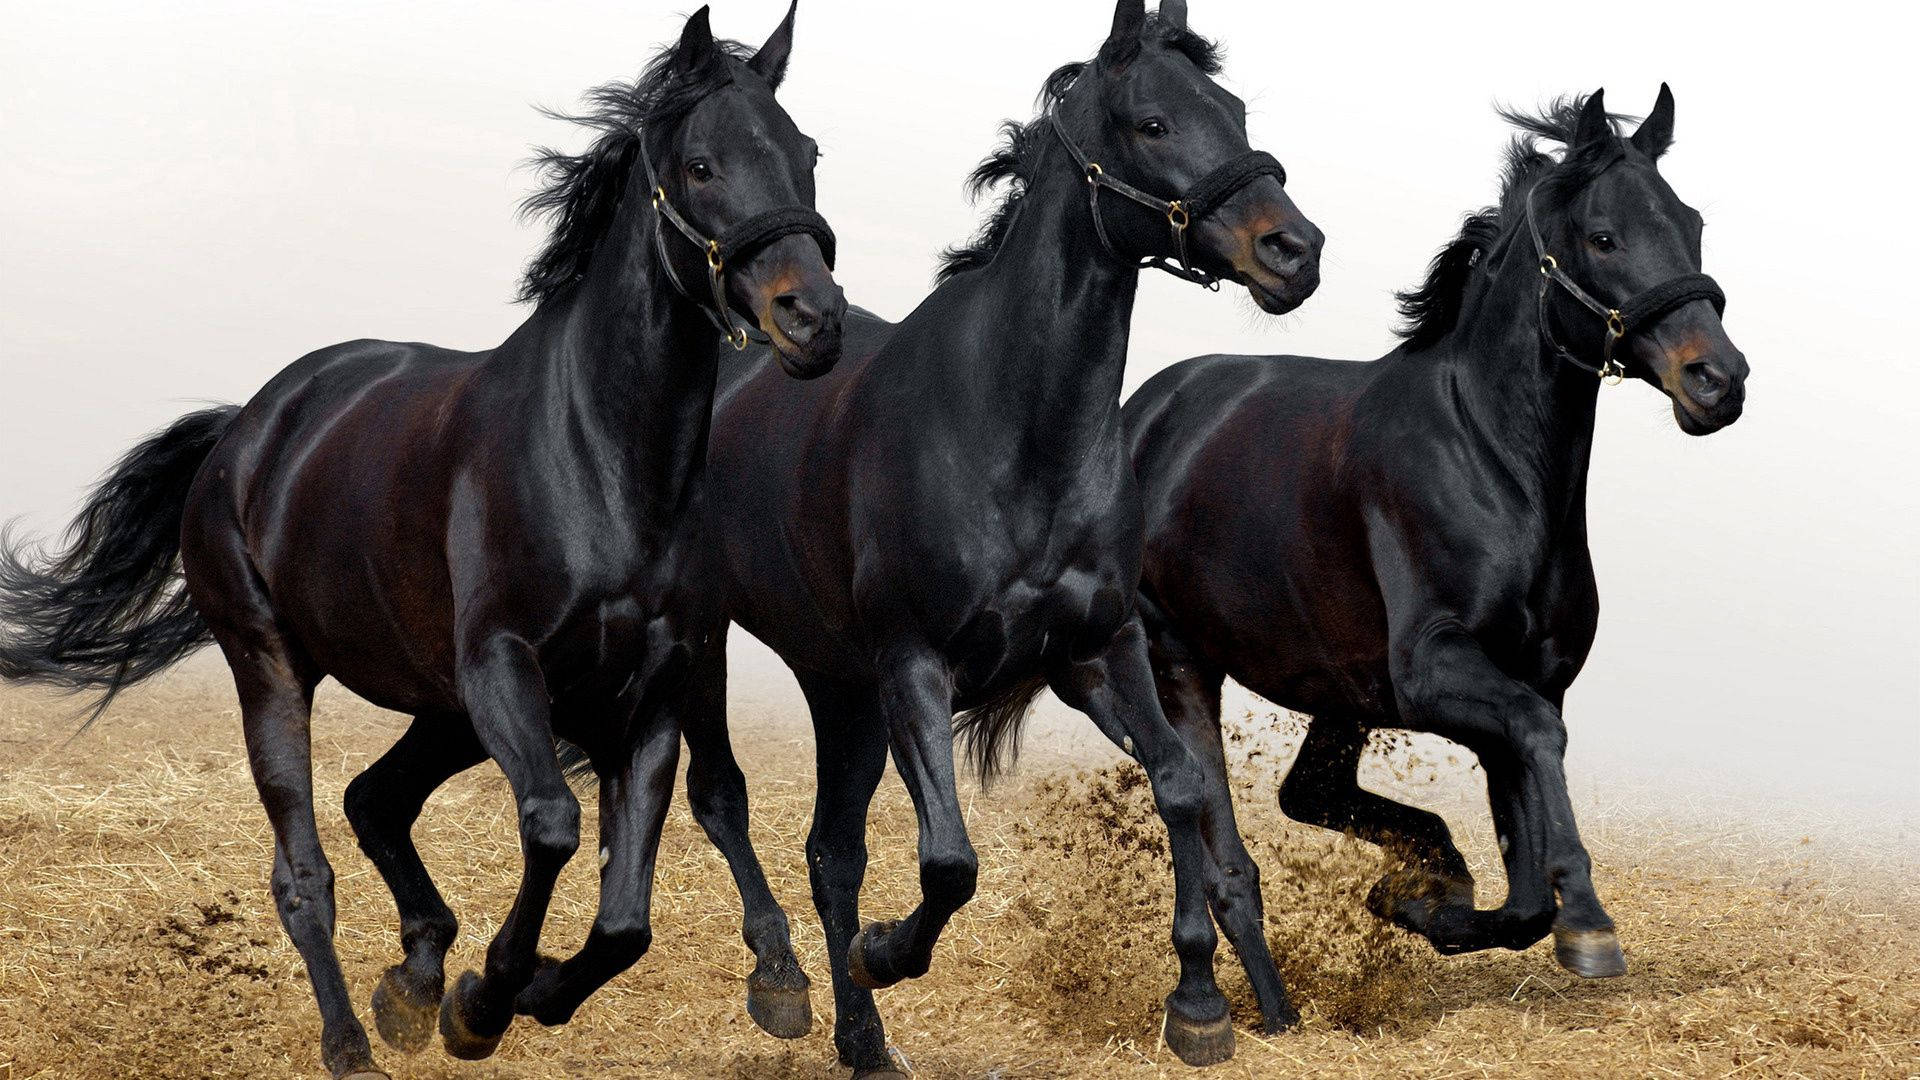 Running Black Horses Painting Wallpaper